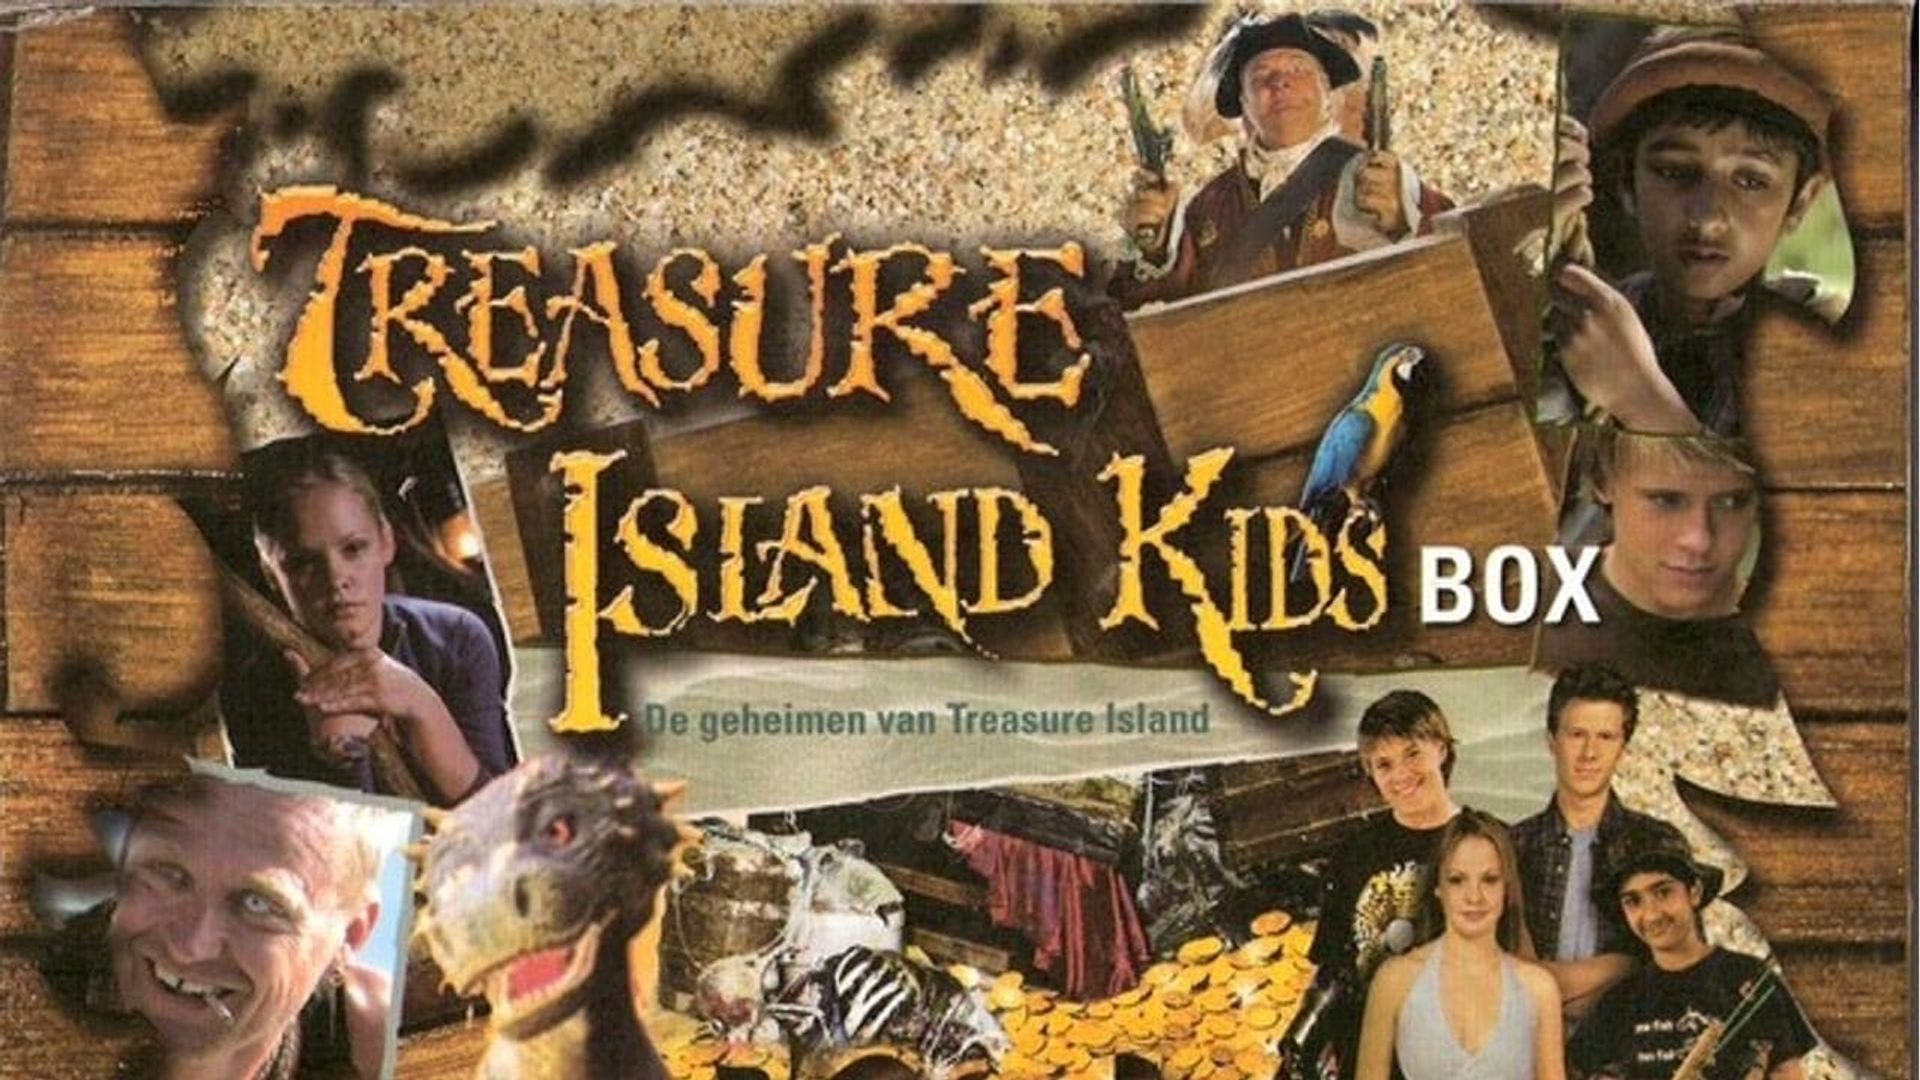 Treasure Island Kids: The Monster of Treasure Island background